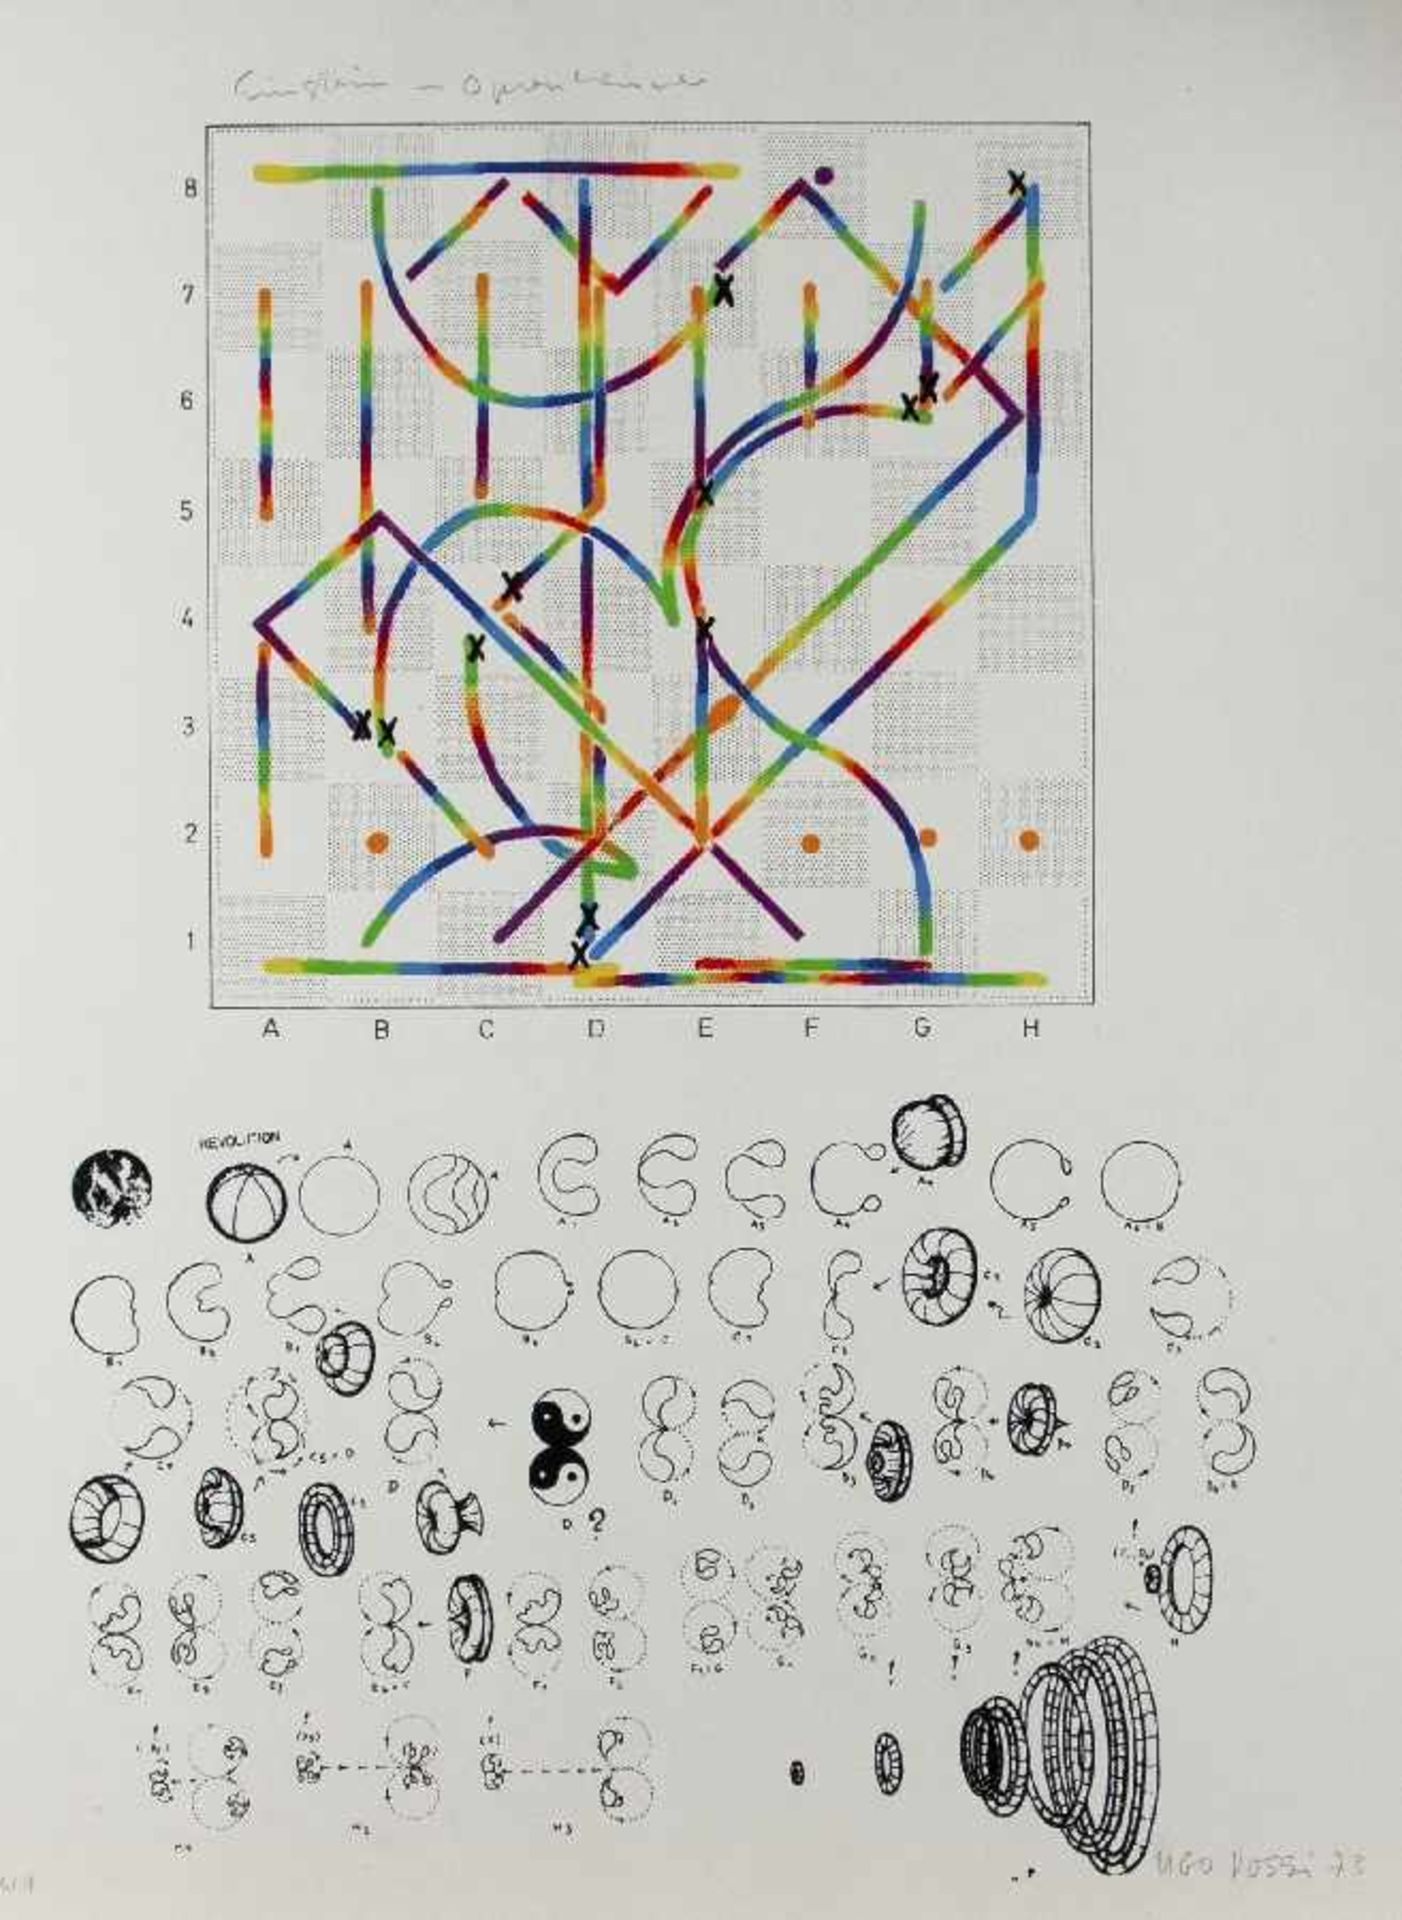 Ugo Dossi 1943 München 10 weltberühmte Schachpartien 10 Farblithografien auf Papier, 1973; H je